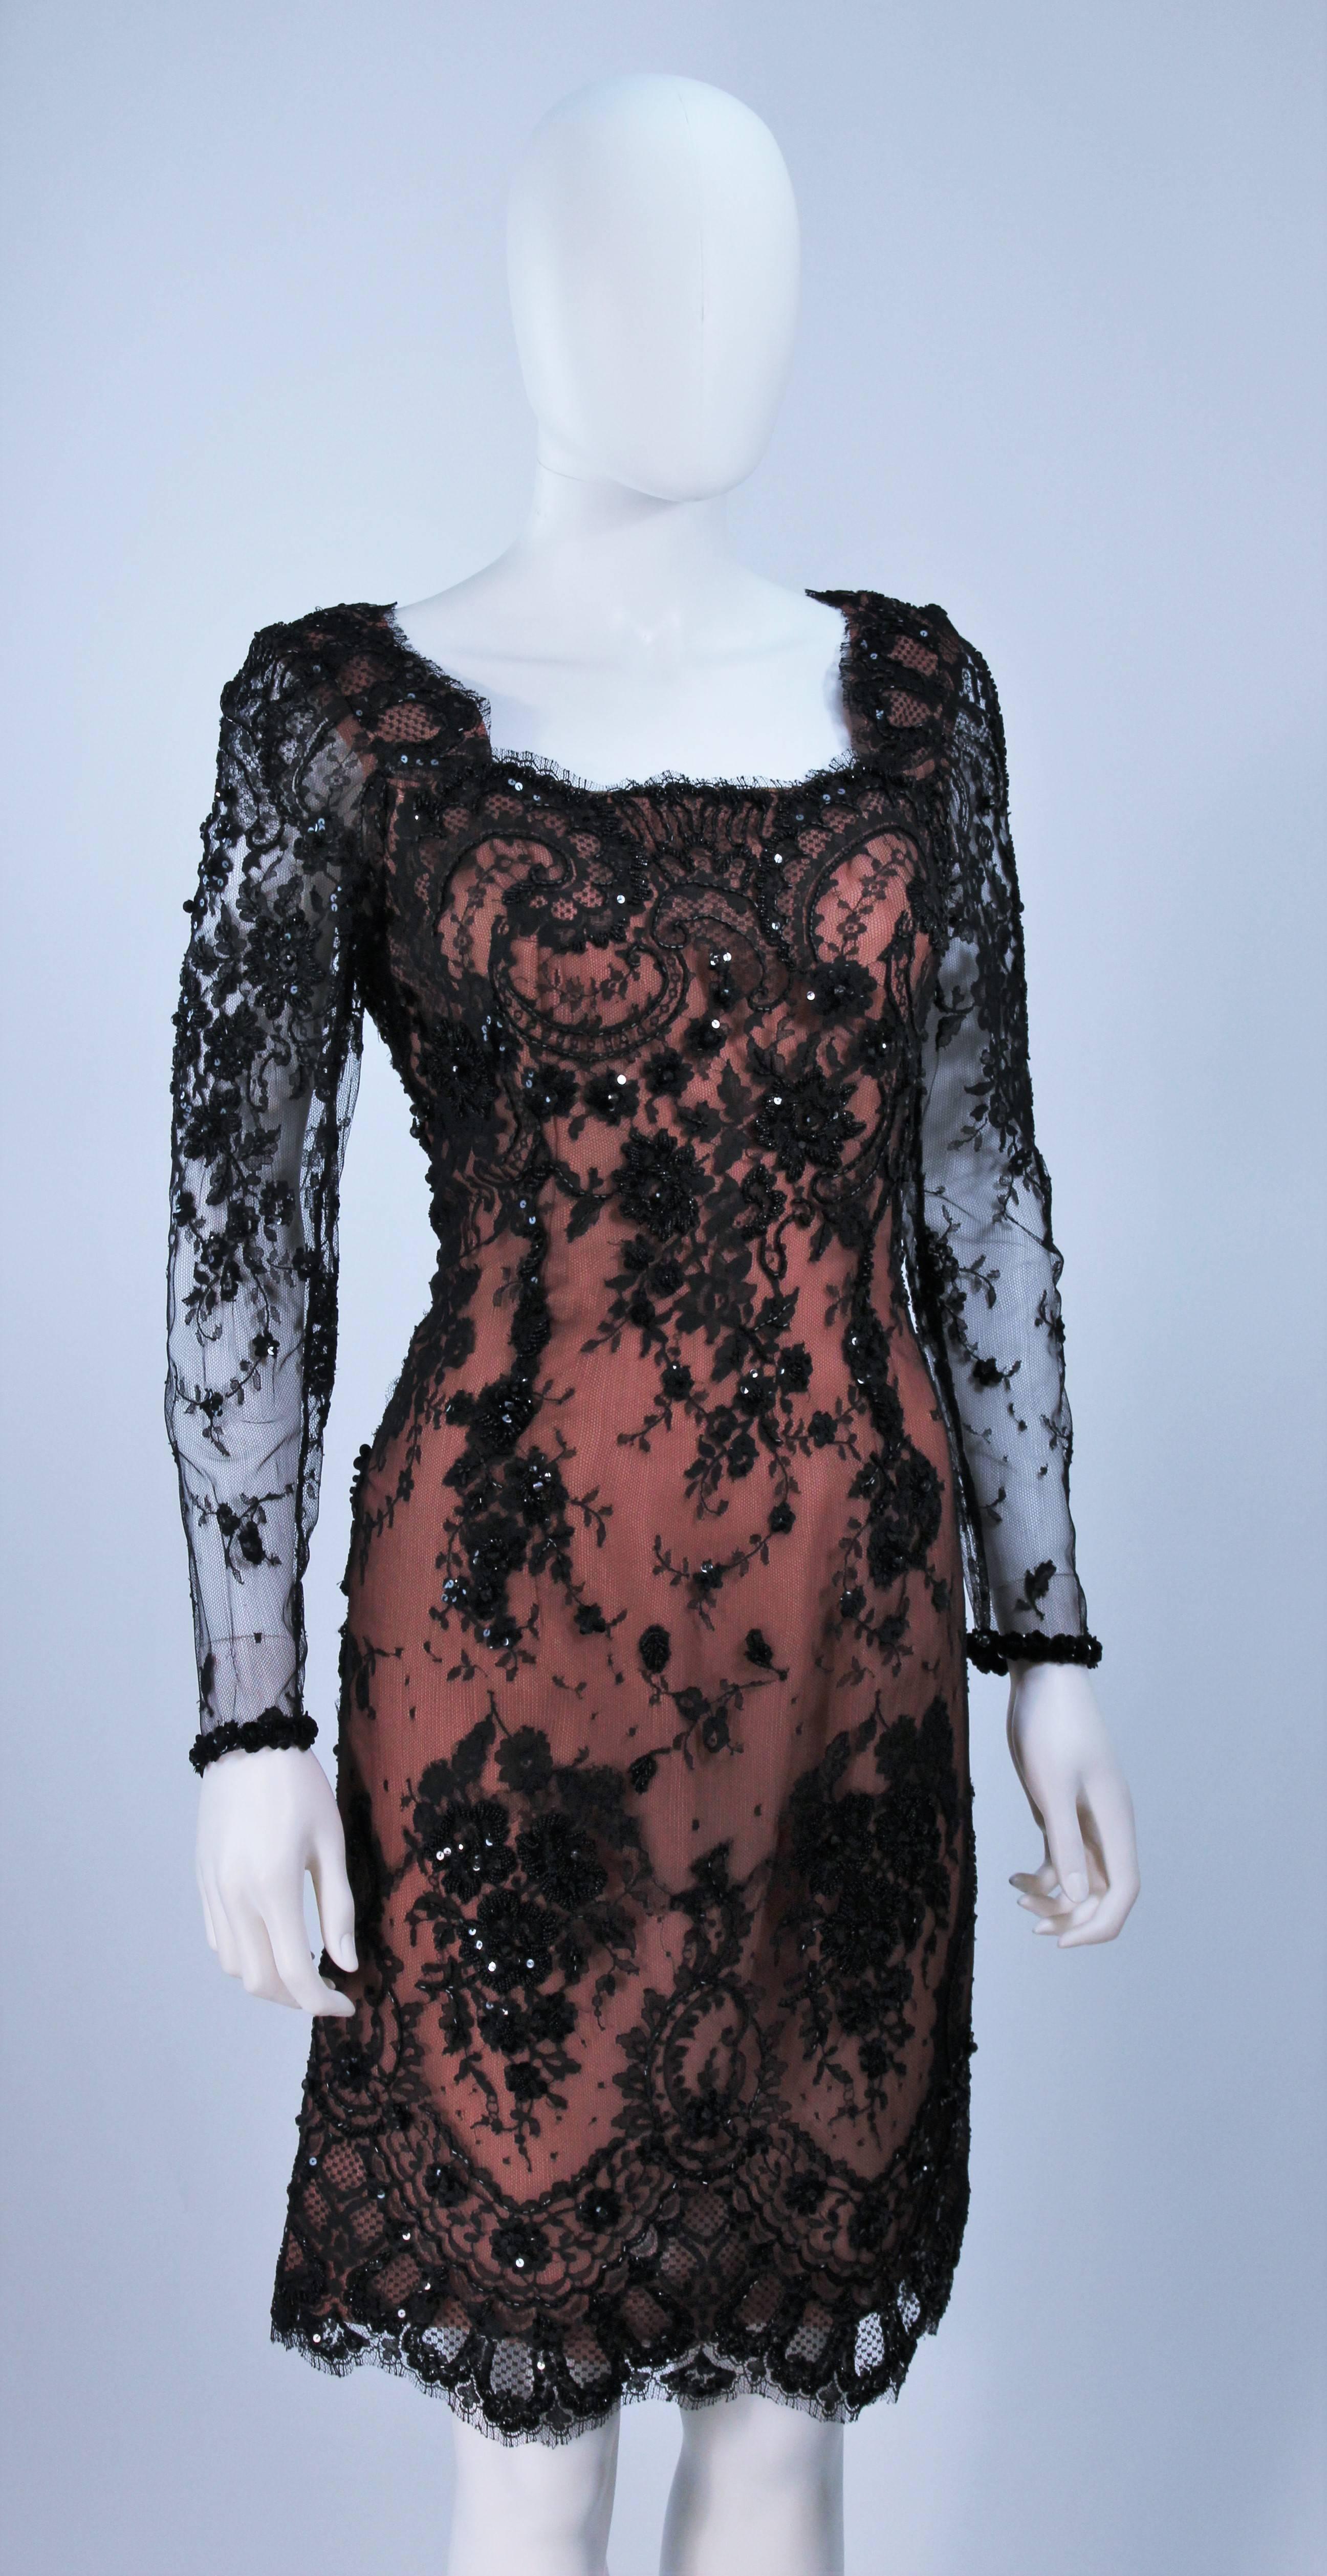 FE ZANDI Black Lace Embellished Cocktail Dress Size 8 For Sale 1